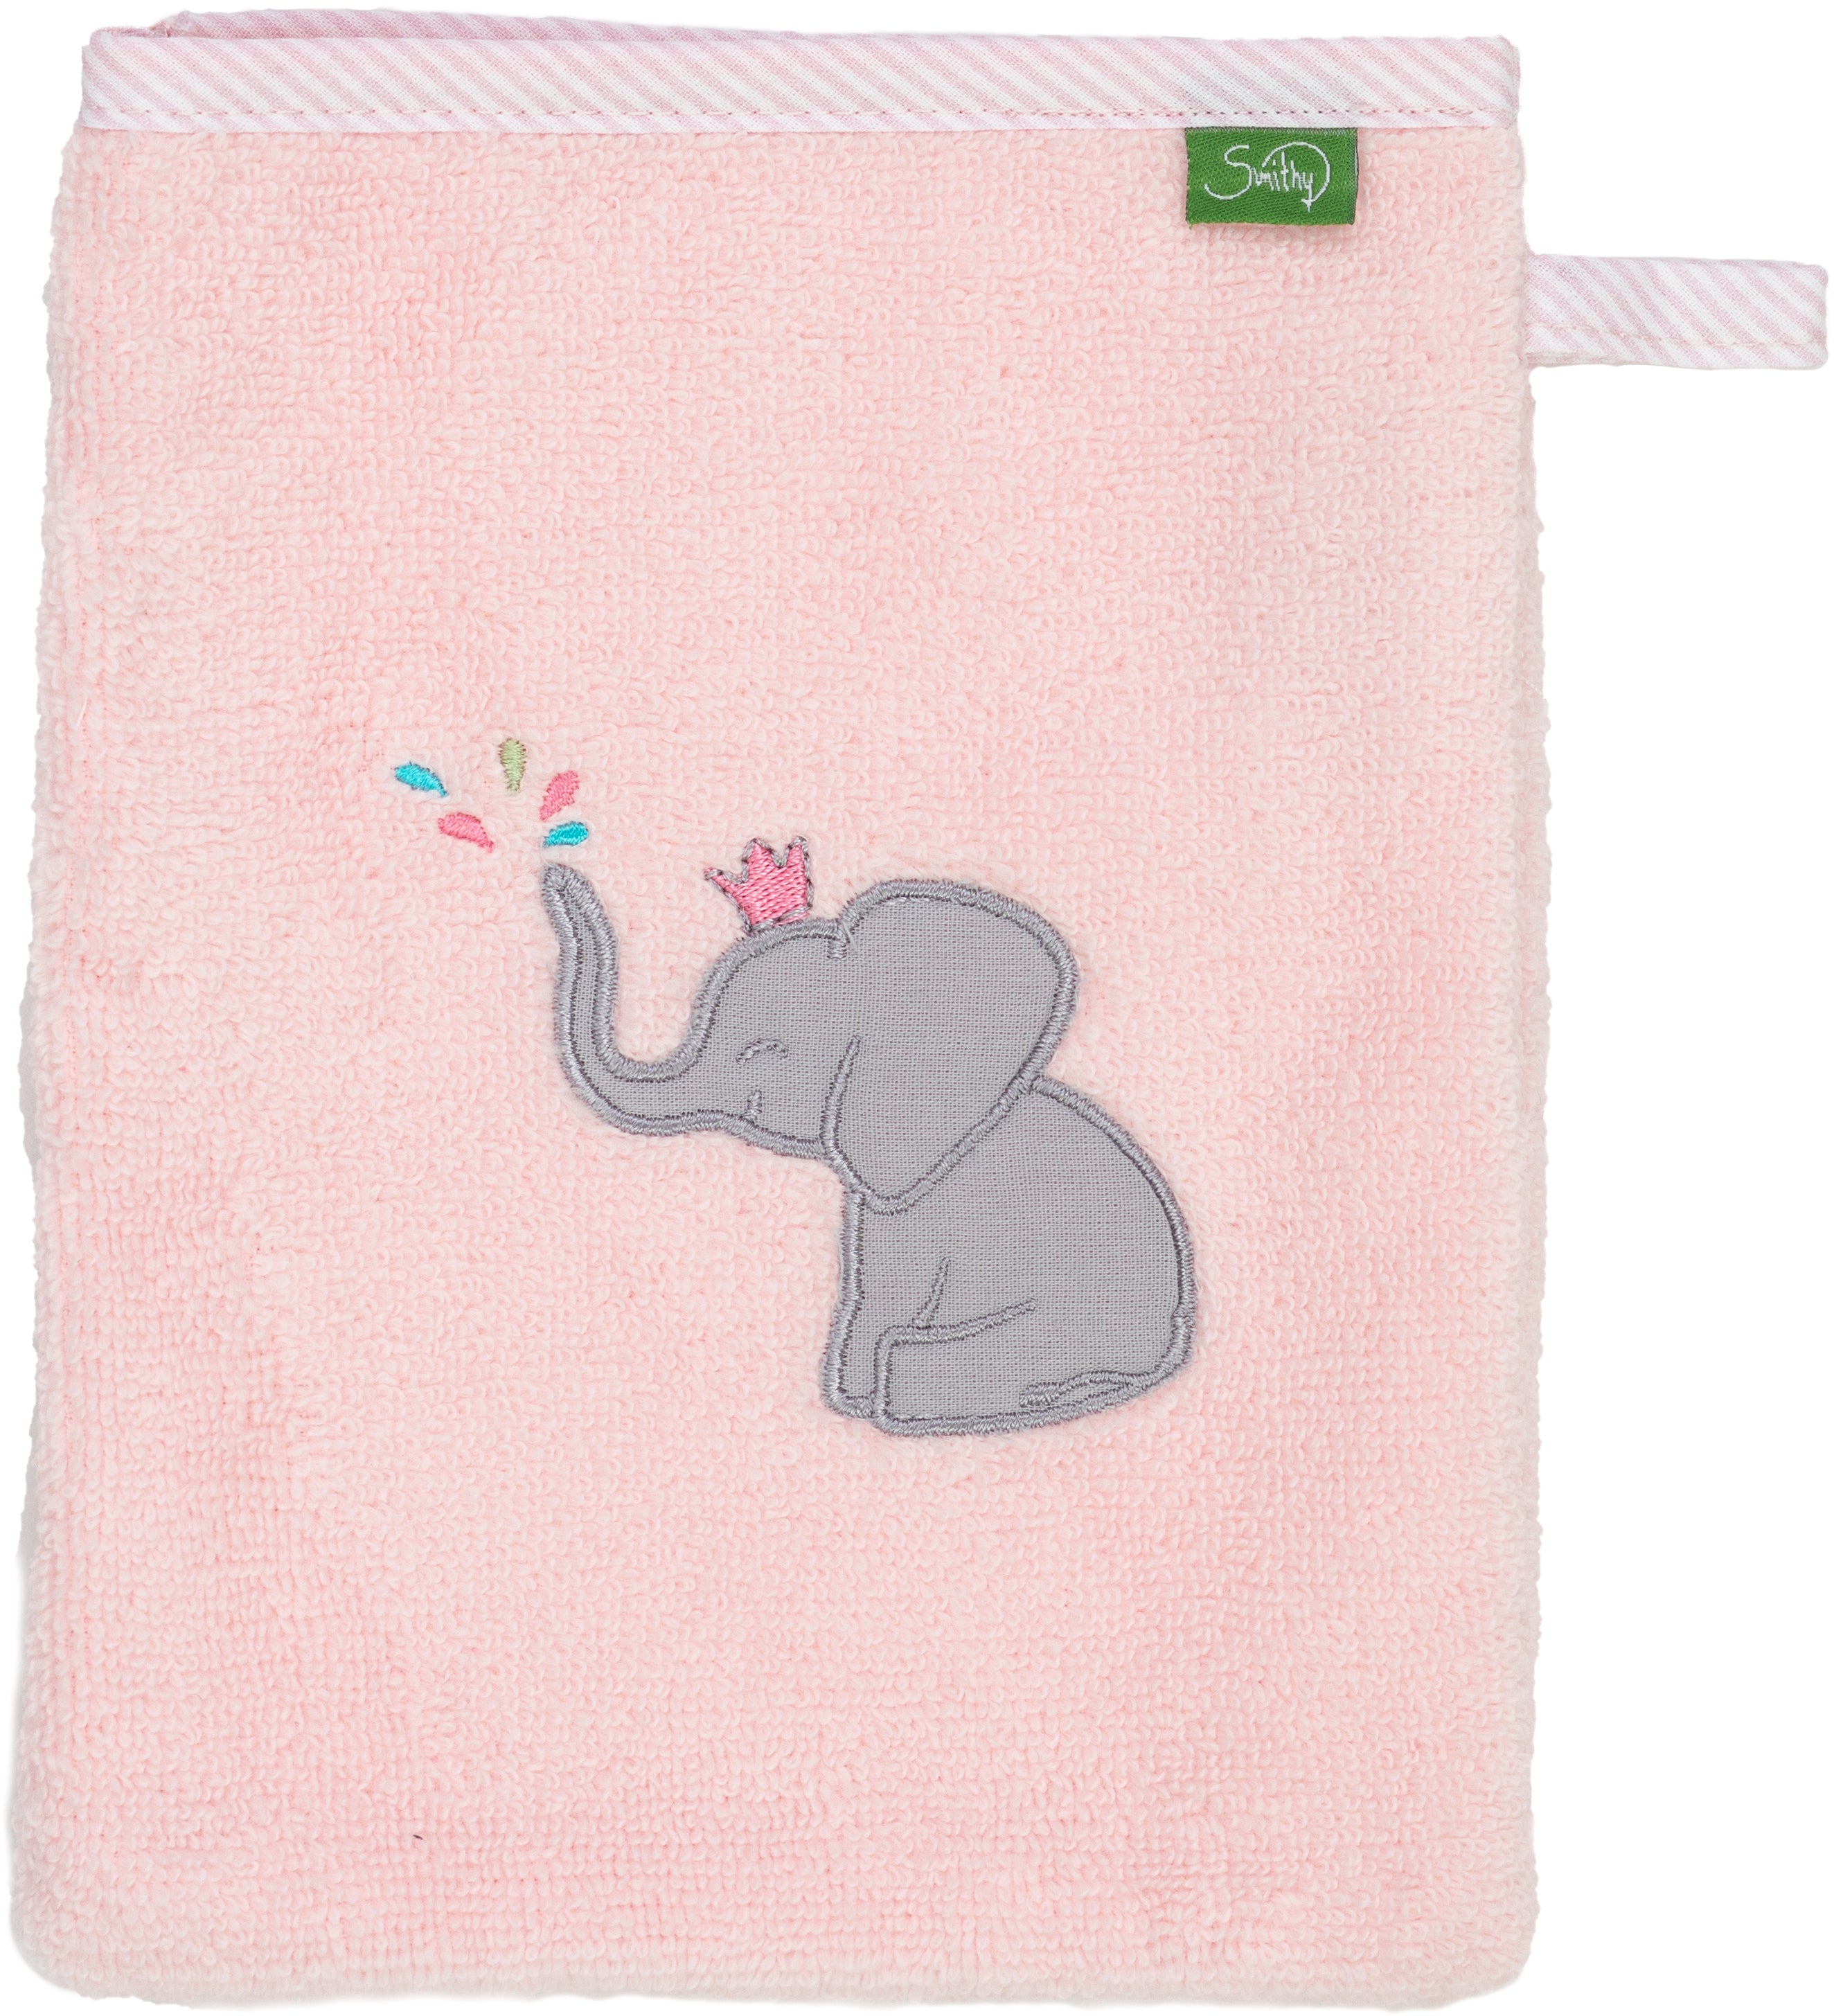 Premium Waschhandschuh Elefant